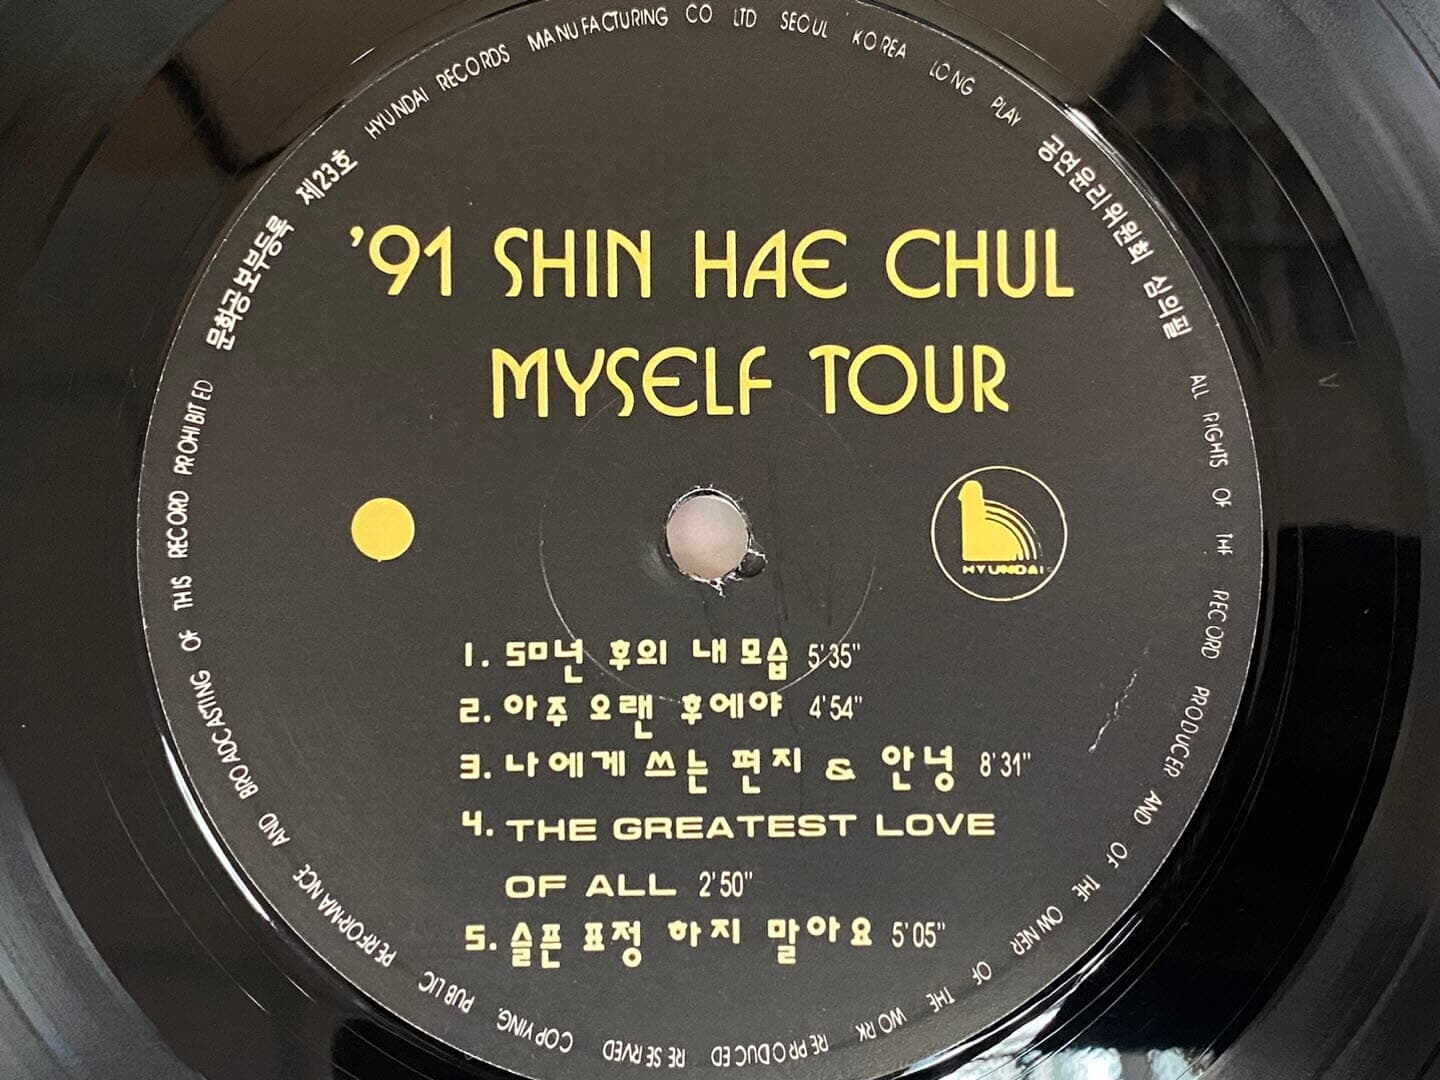 [LP] 신해철 - '91 Shin Hae Chul Myself Tour - Live Album LP [현대음반 HDDY-1016]